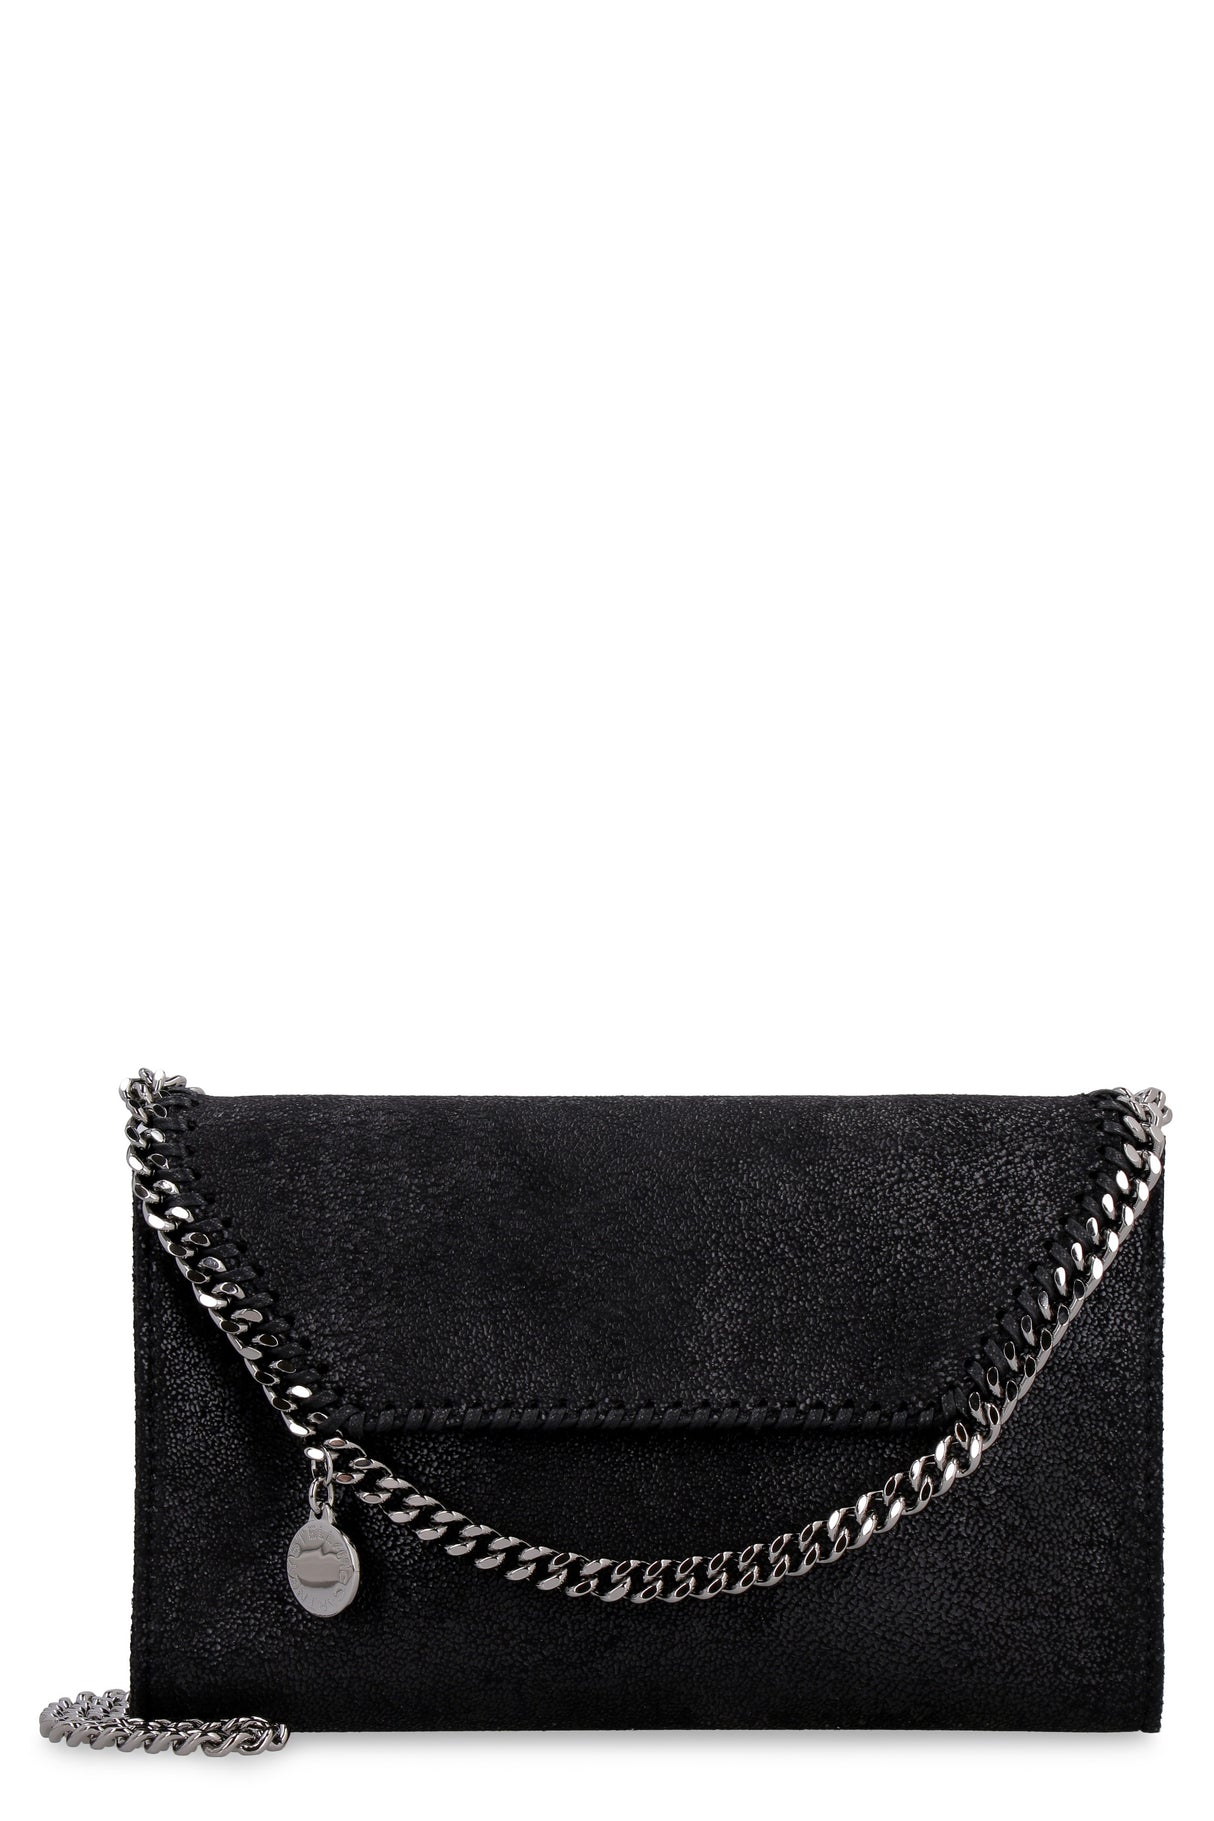 STELLA MCCARTNEY Mini Black Faux Leather Crossbody Bag with Silver Chain Detail